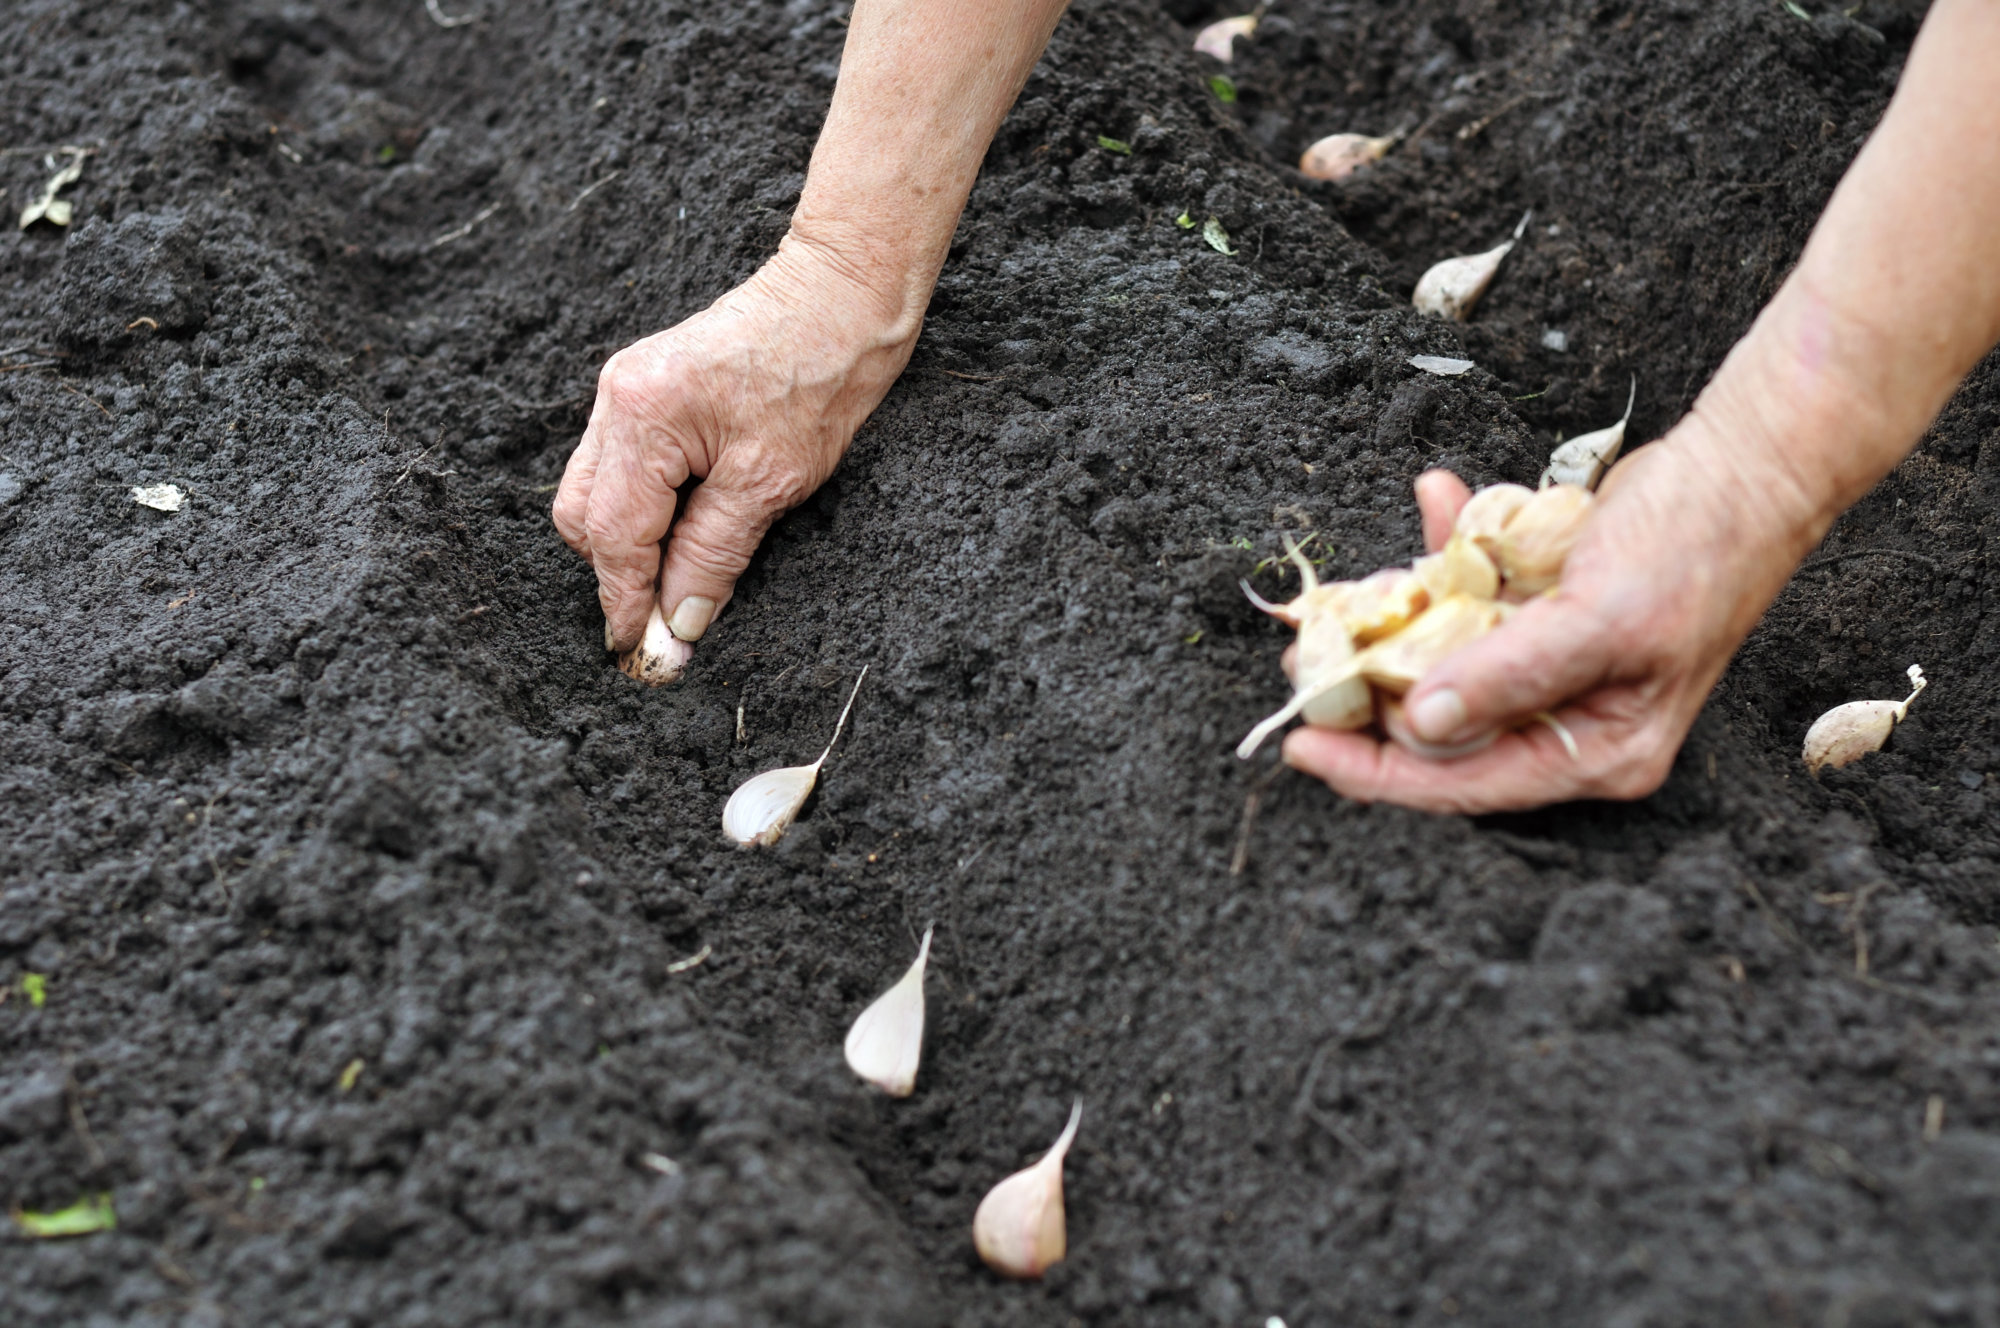 Garden Plot: It’s garlic-planting time